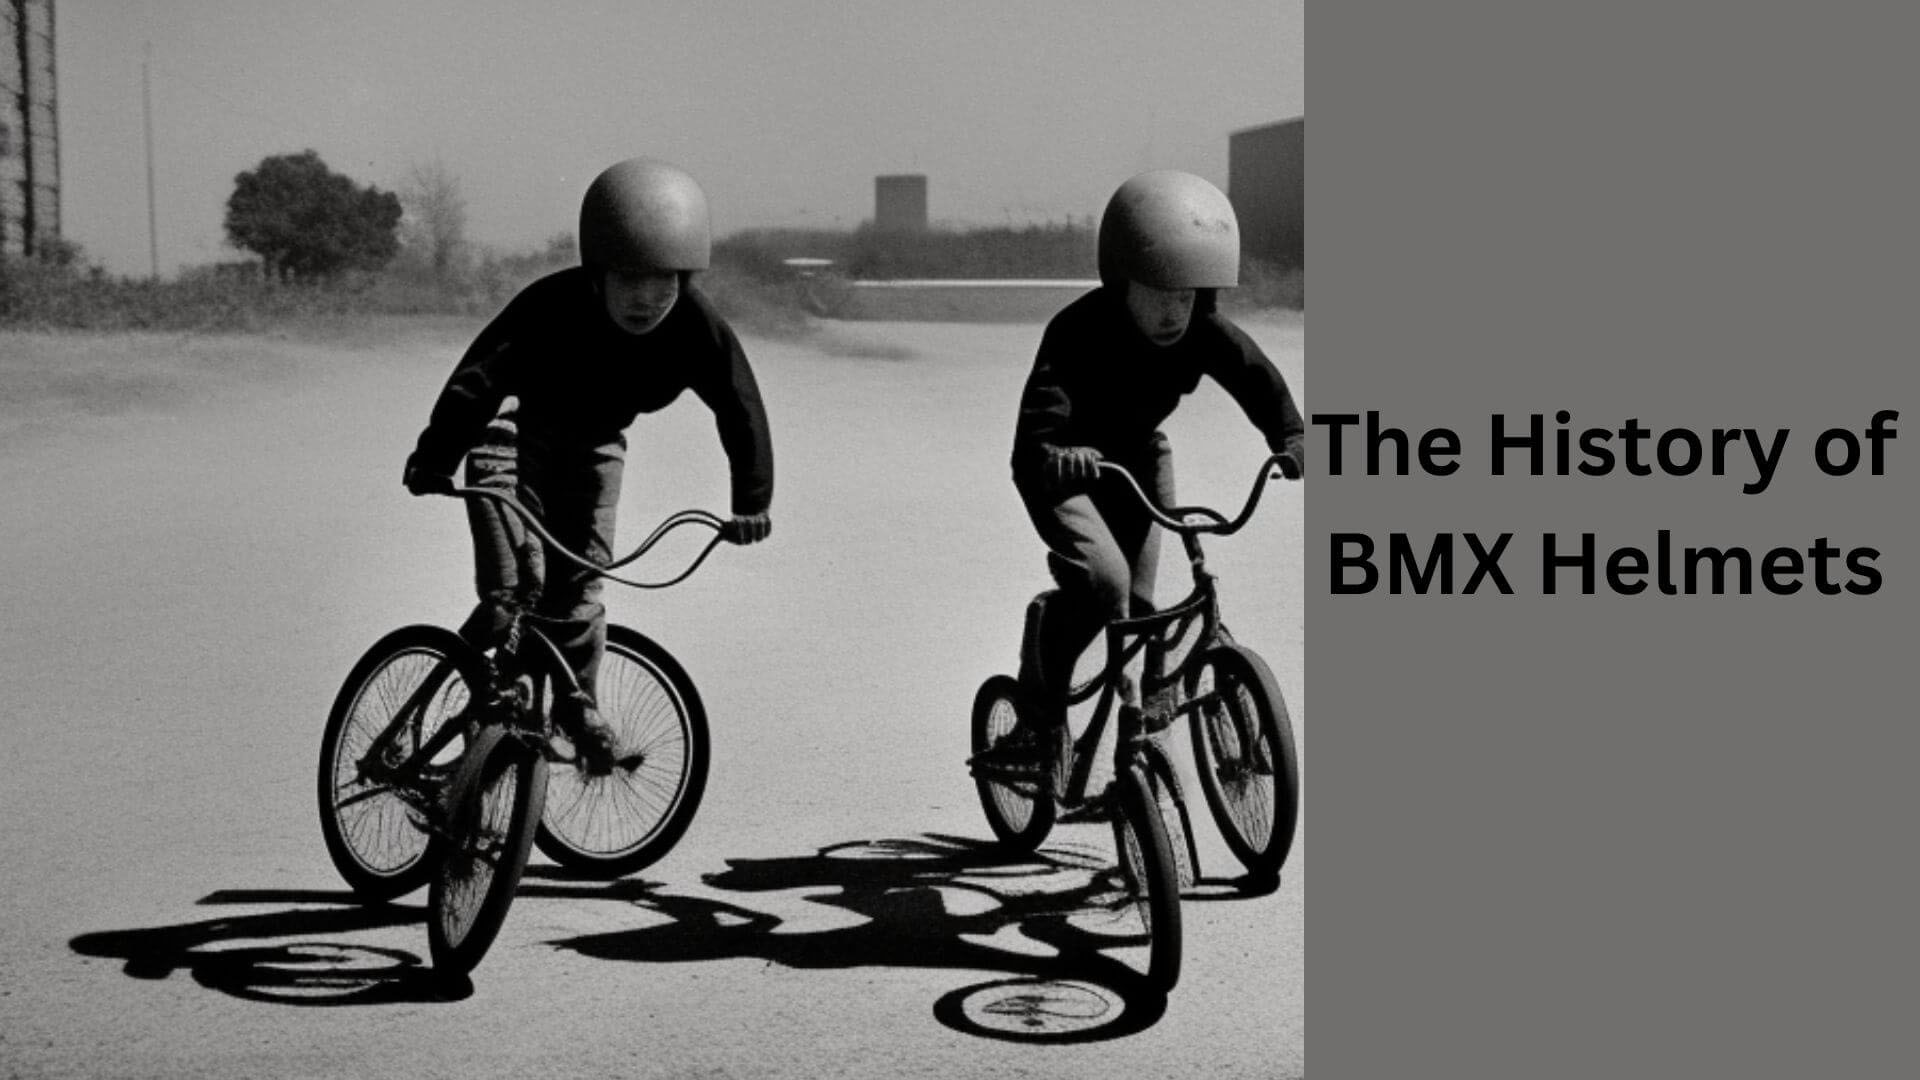 The History of BMX Helmets